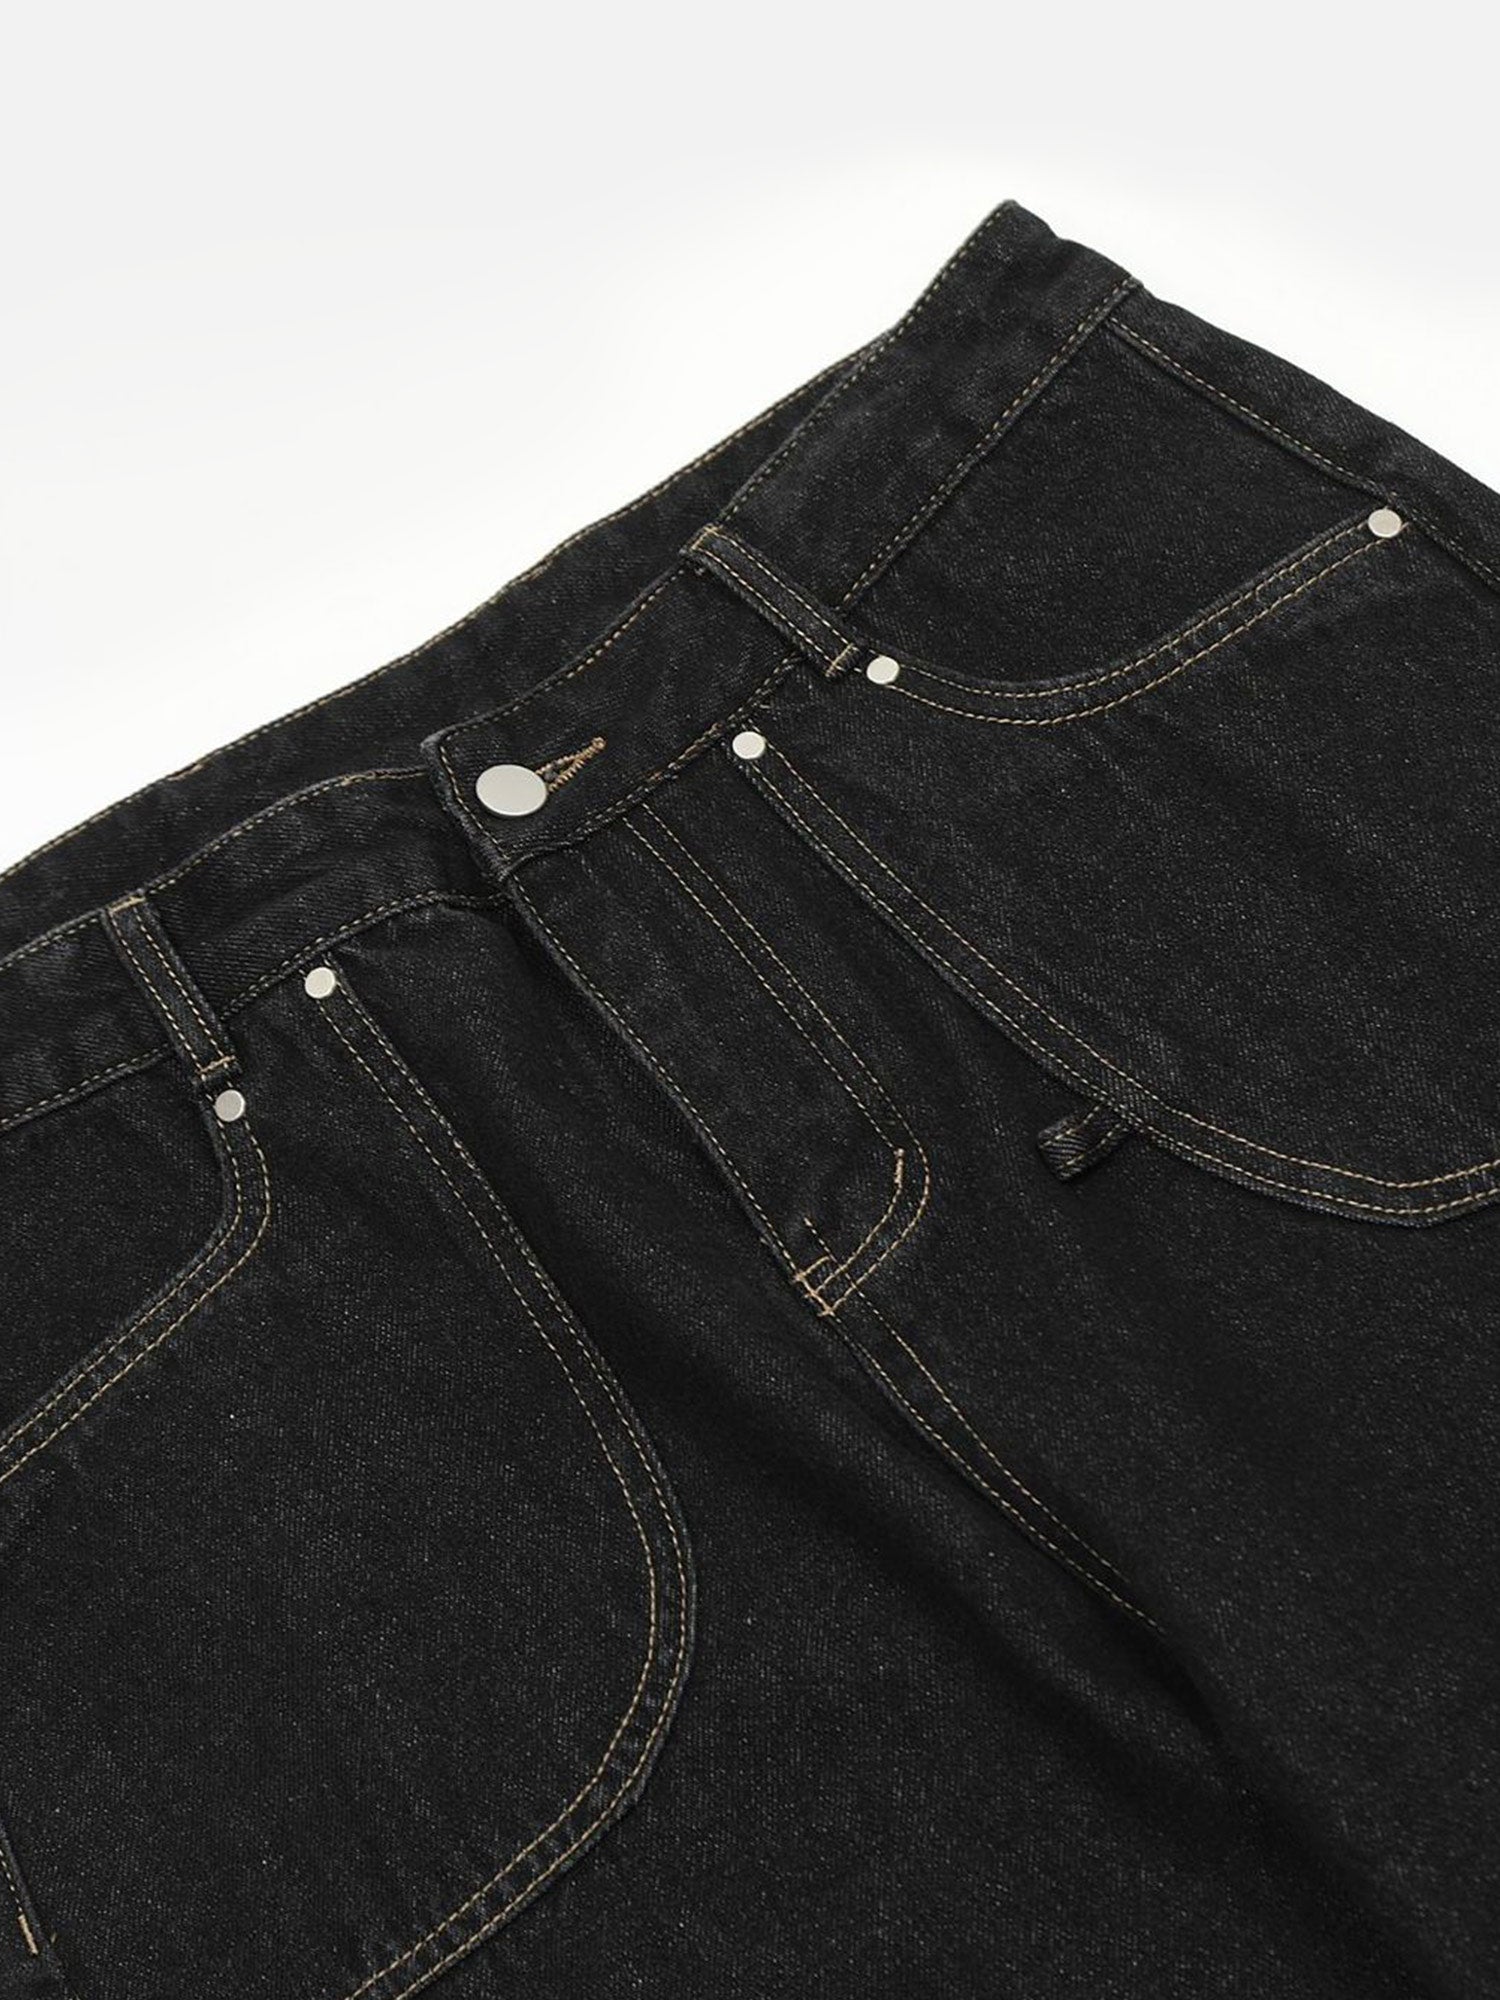 Thesupermade Fashionable Niche Design Pocket Work Jeans